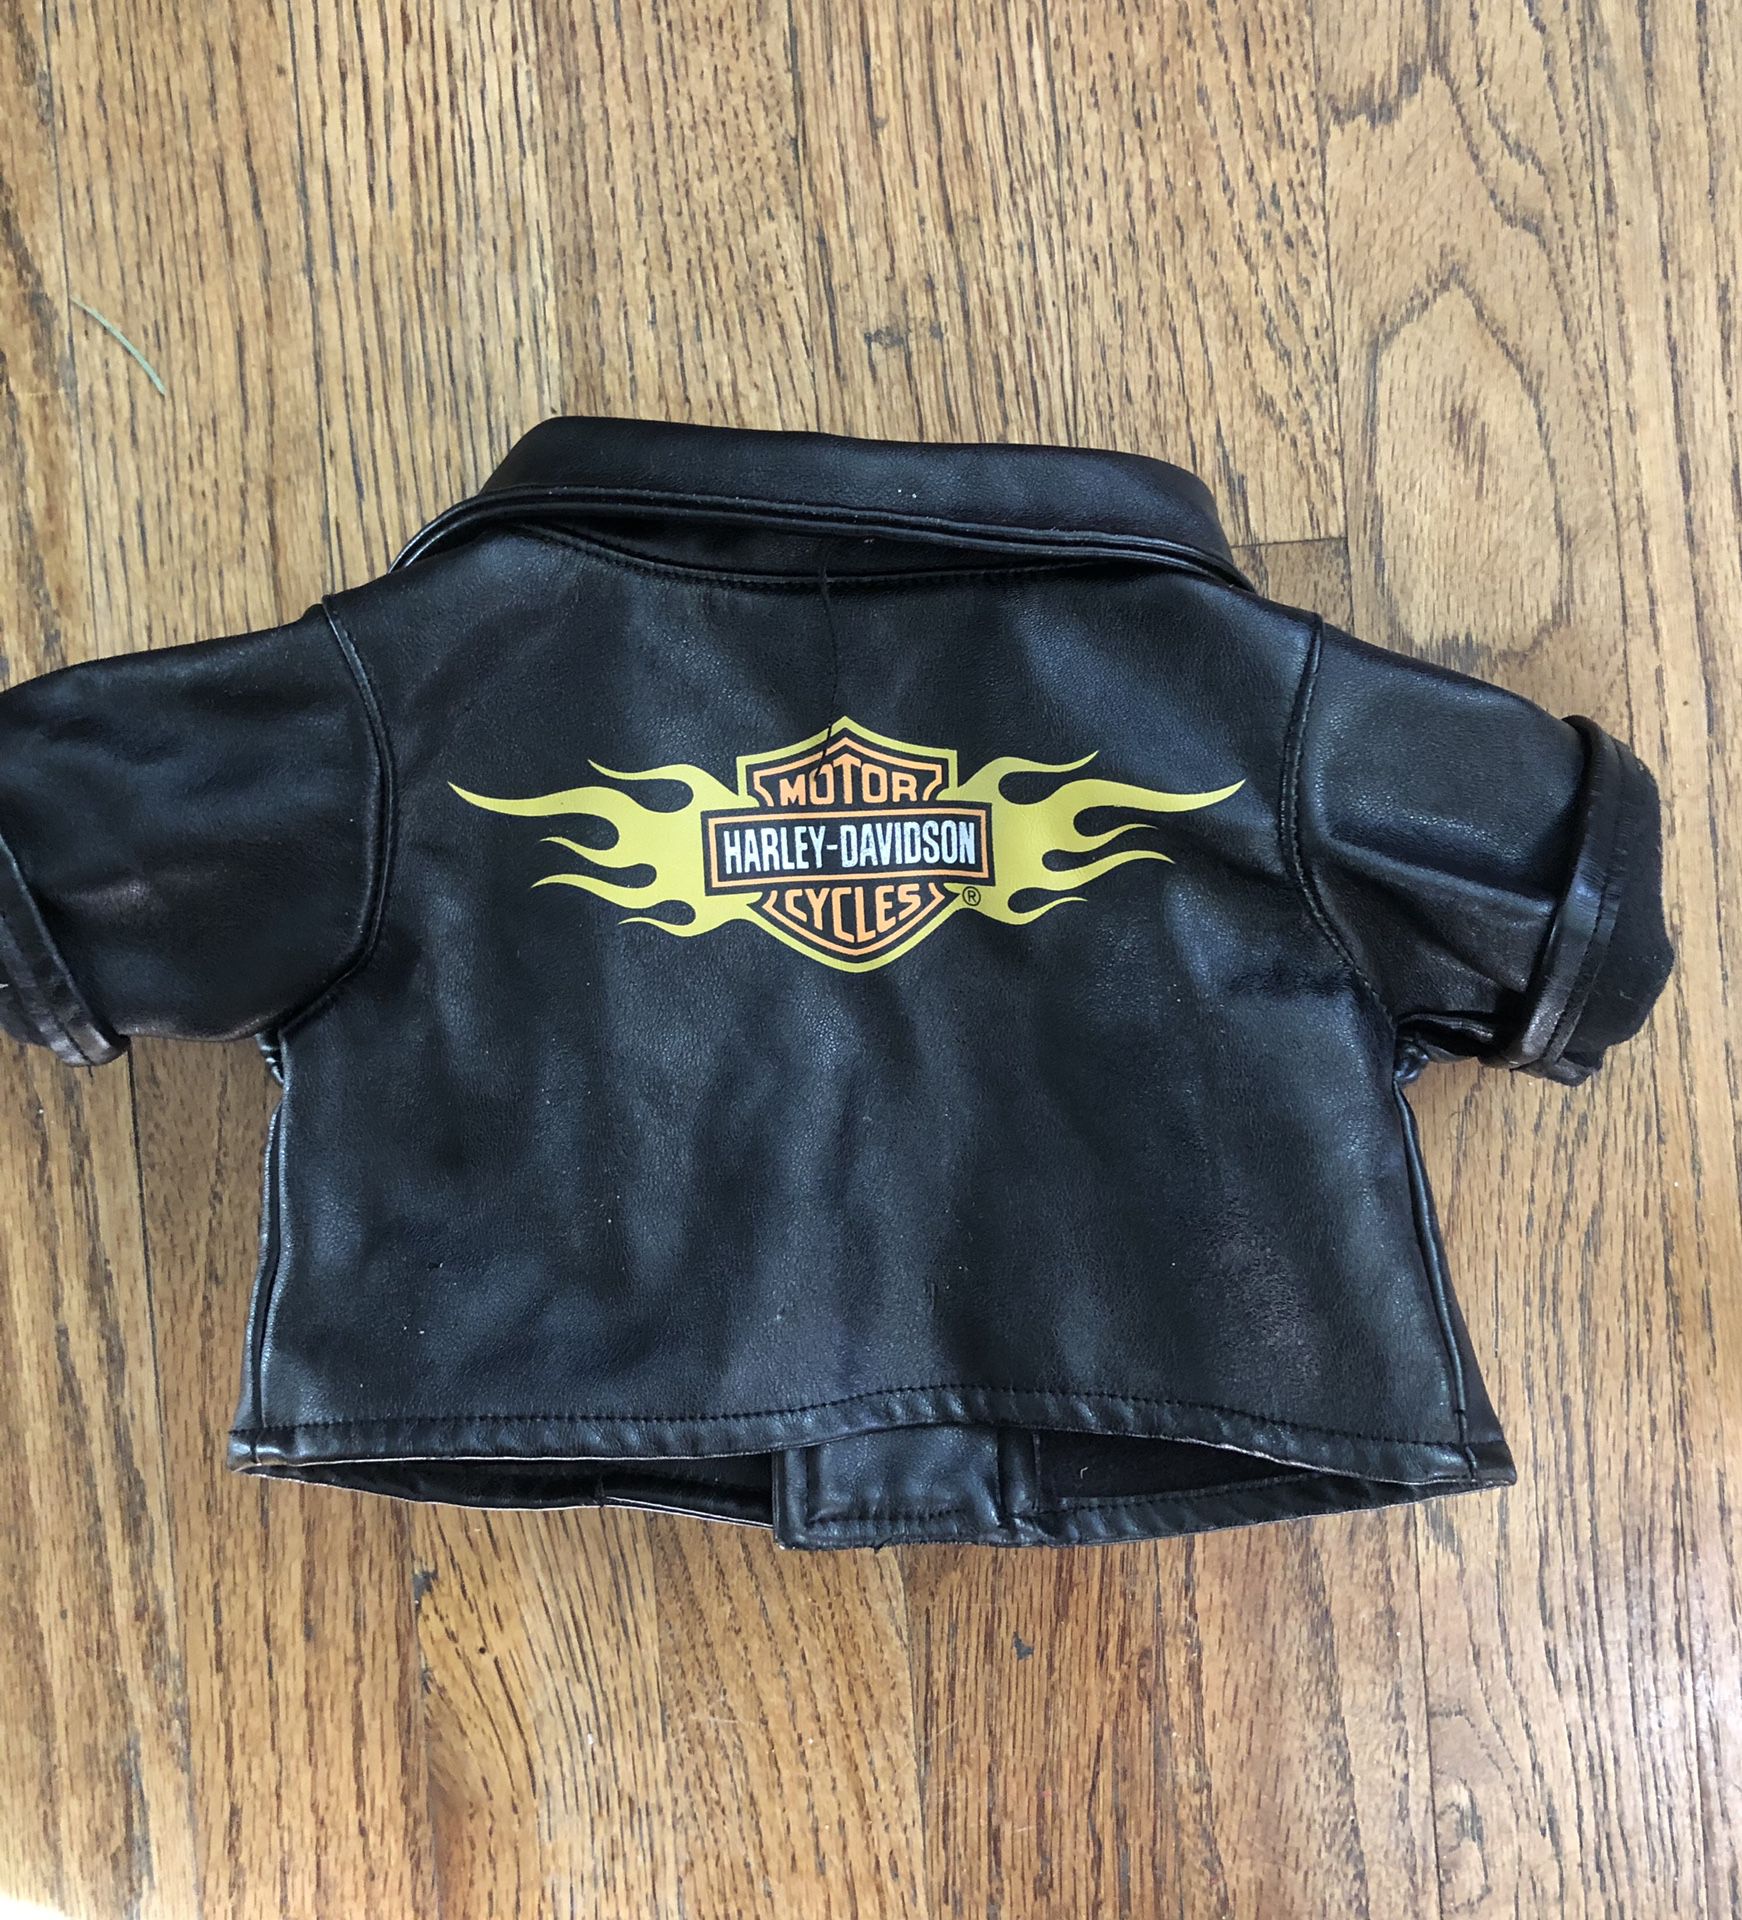 Build a bear Harley Davidson leather motorcycle jacket